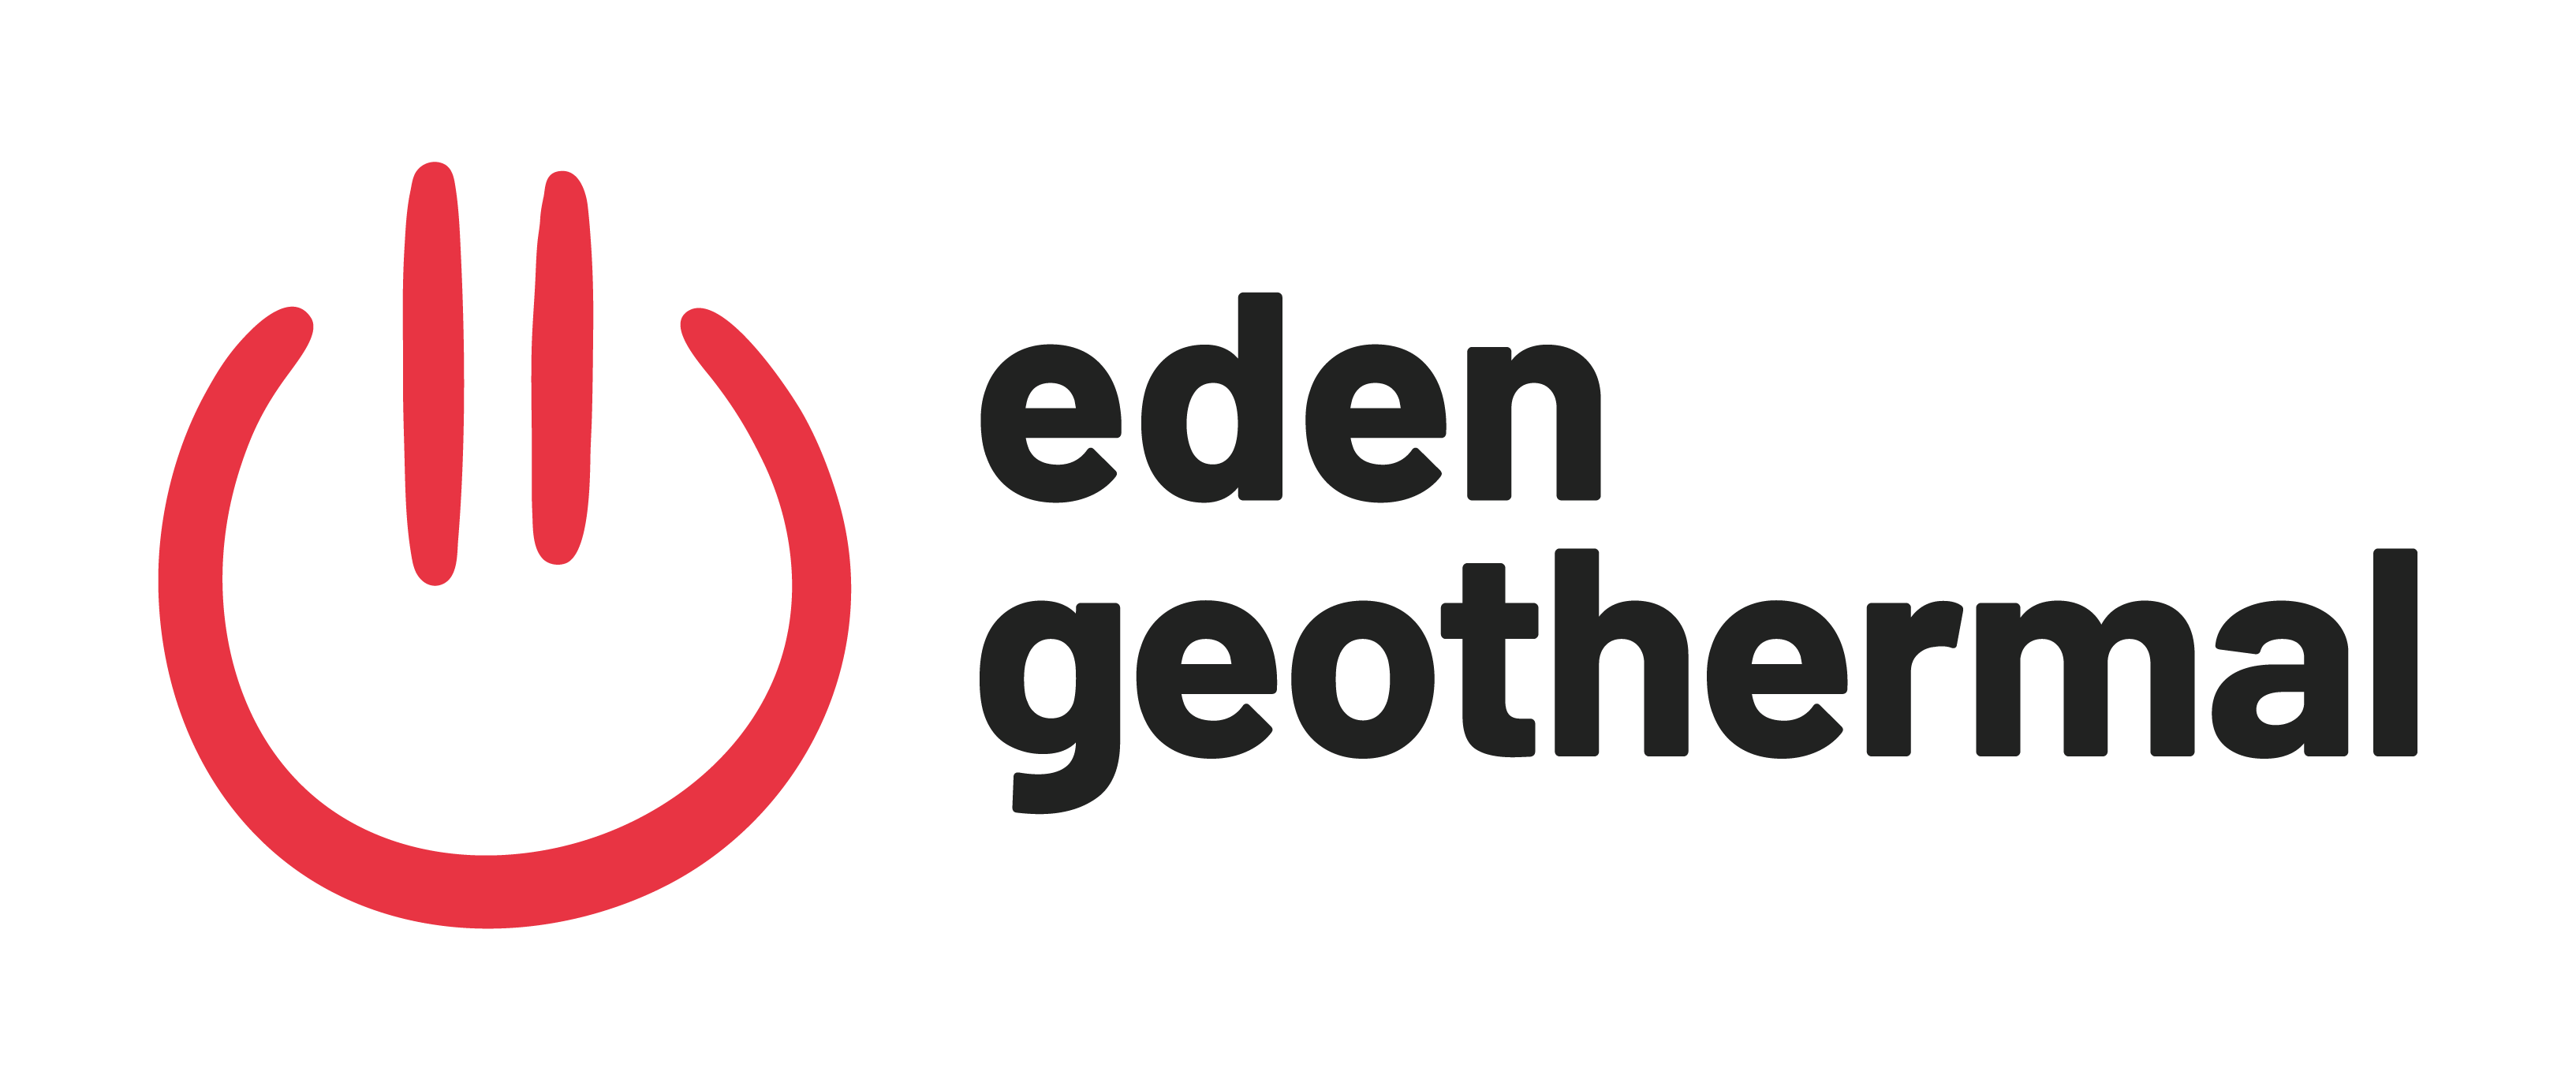 Organisation Logo - Eden Geothermal Ltd